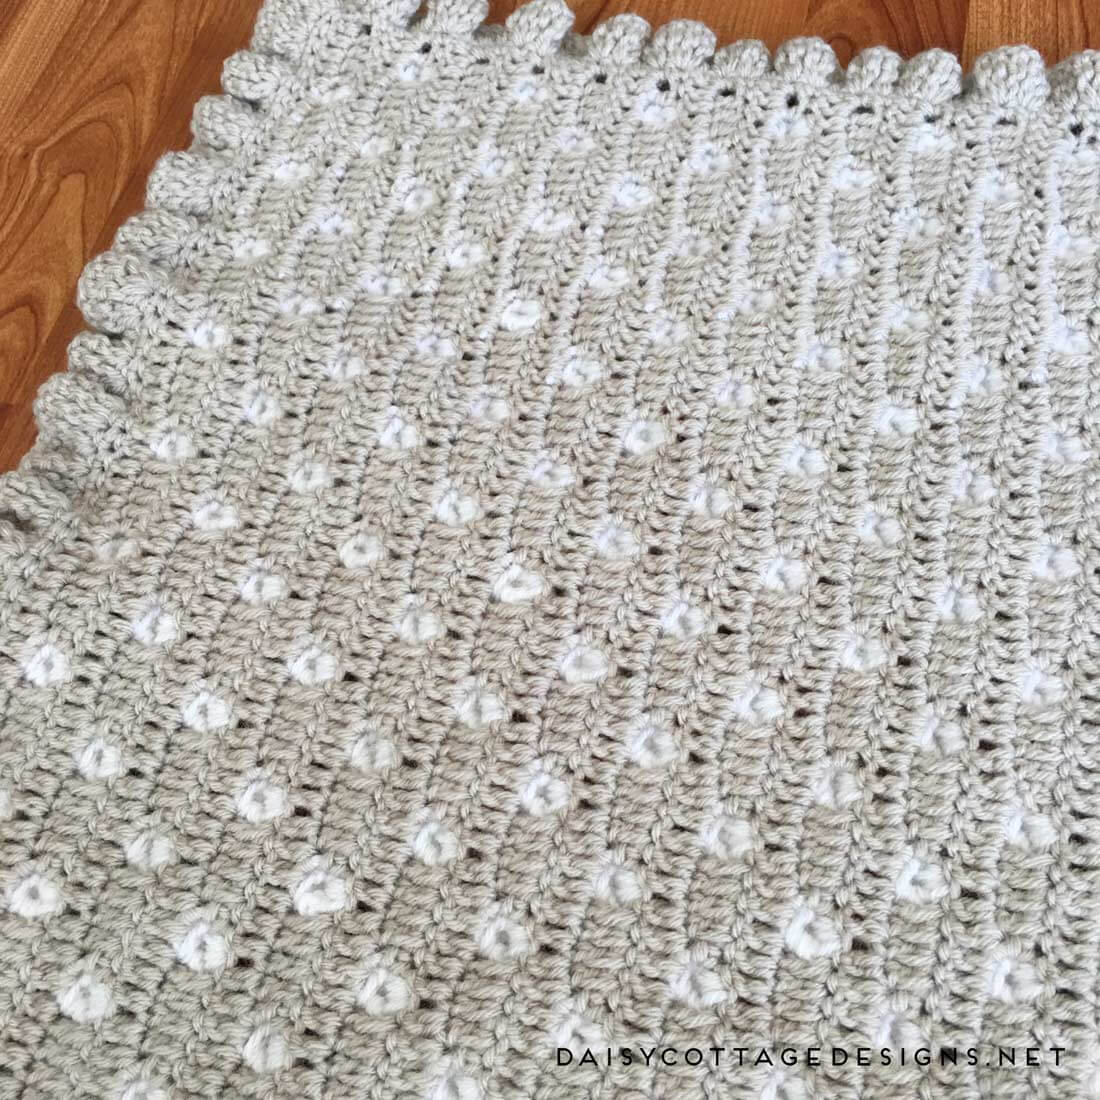 Baby Crochet Blanket Patterns Crochet Ba Blanket Pattern From Daisy Cottage Designs